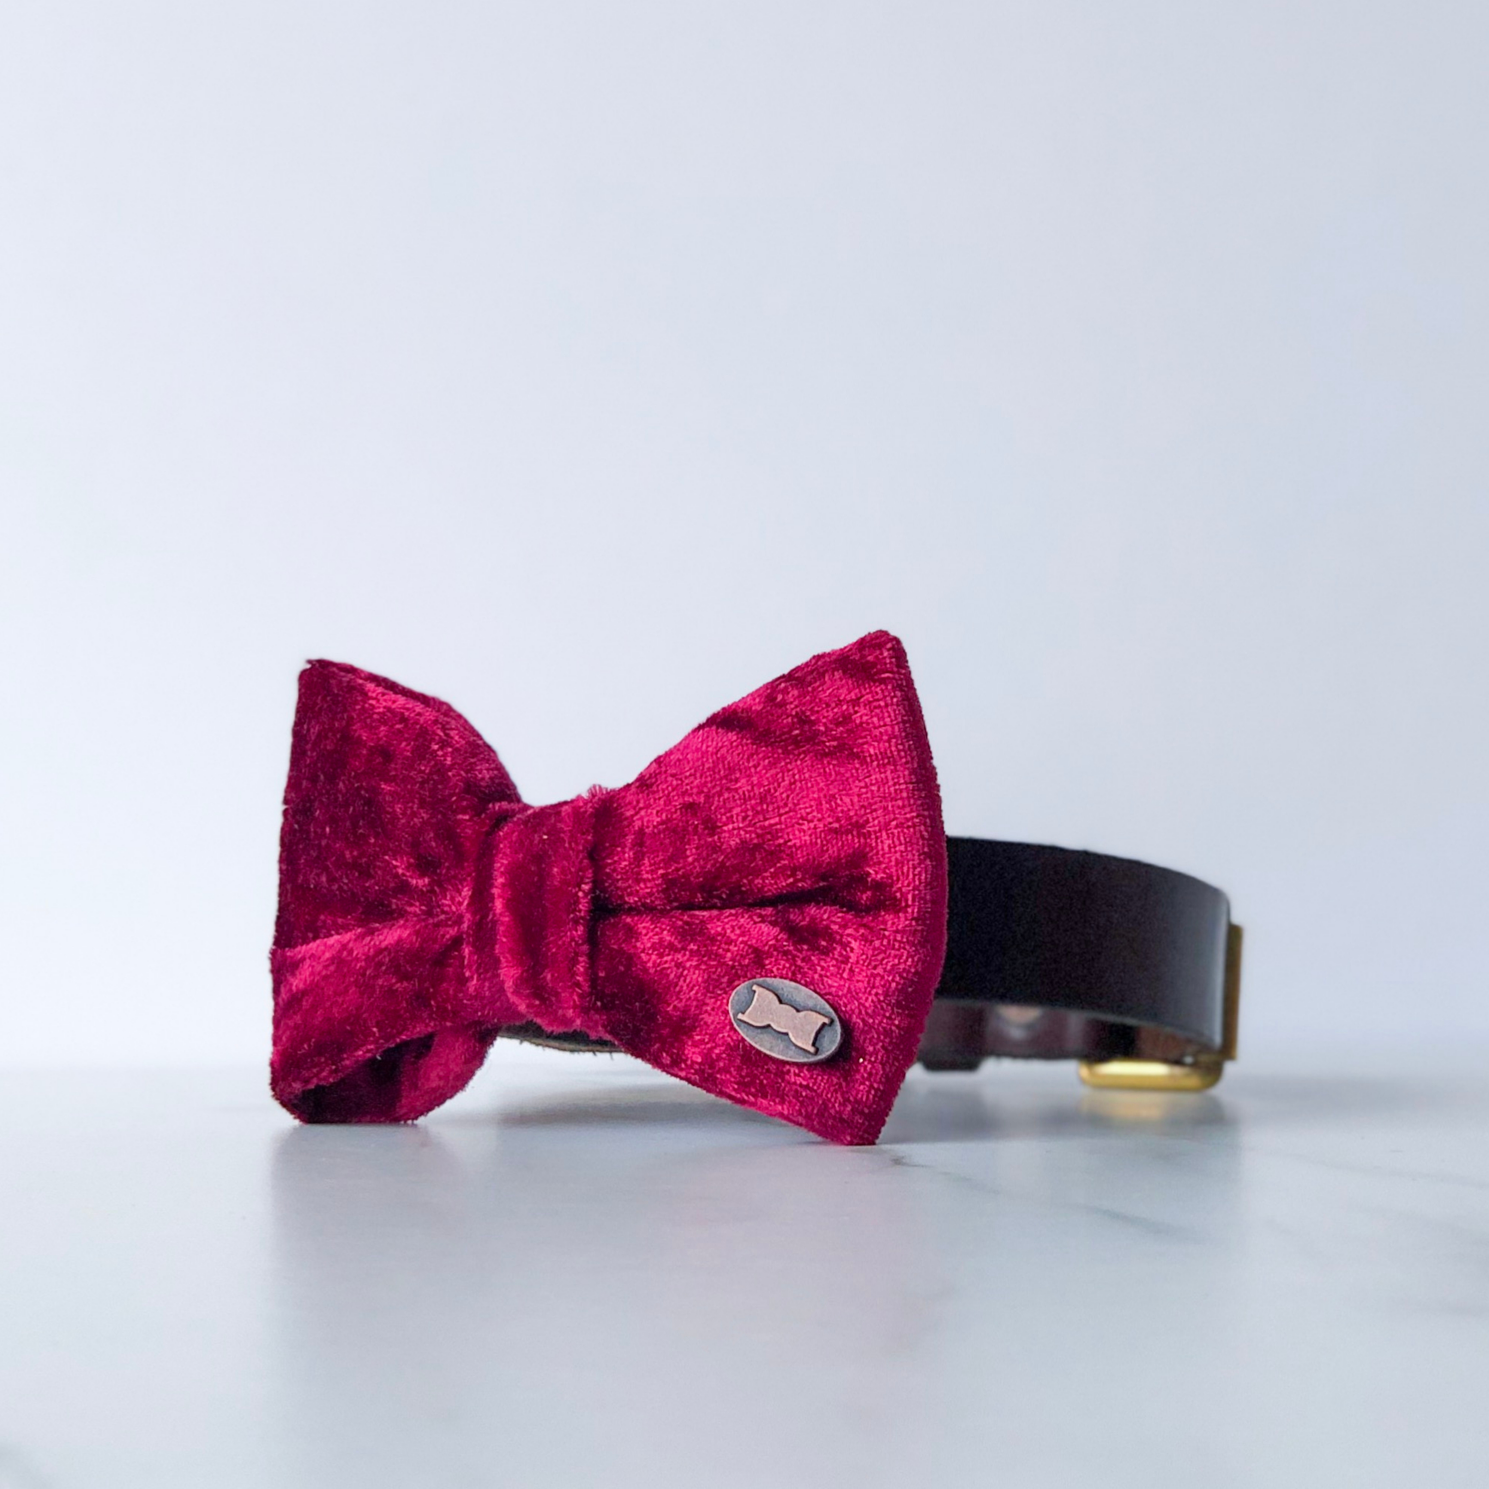 Dark red velvet dog bow tie in small